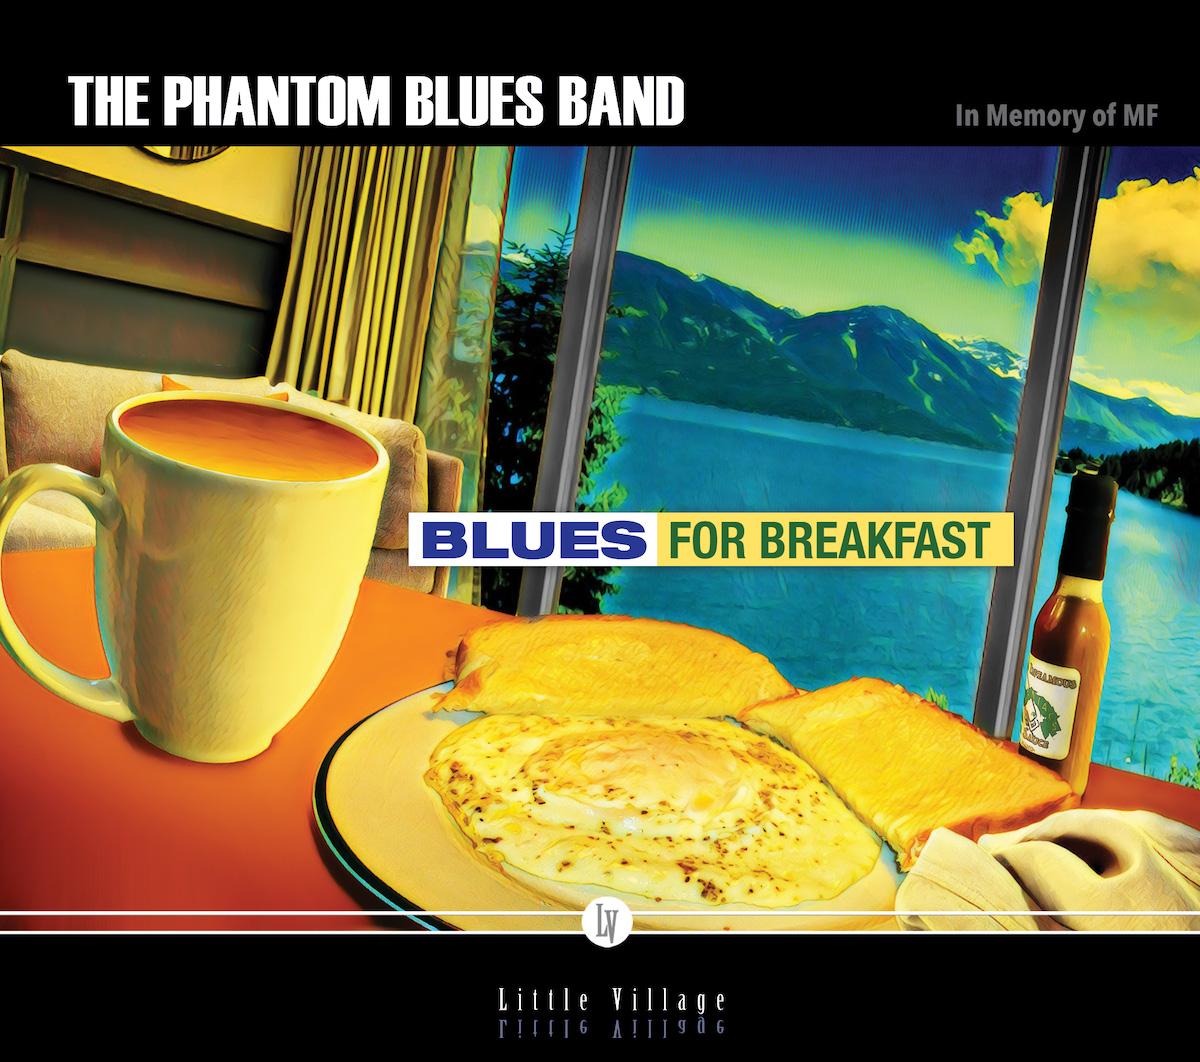 the blues for breakfast- Phantom Blues Band